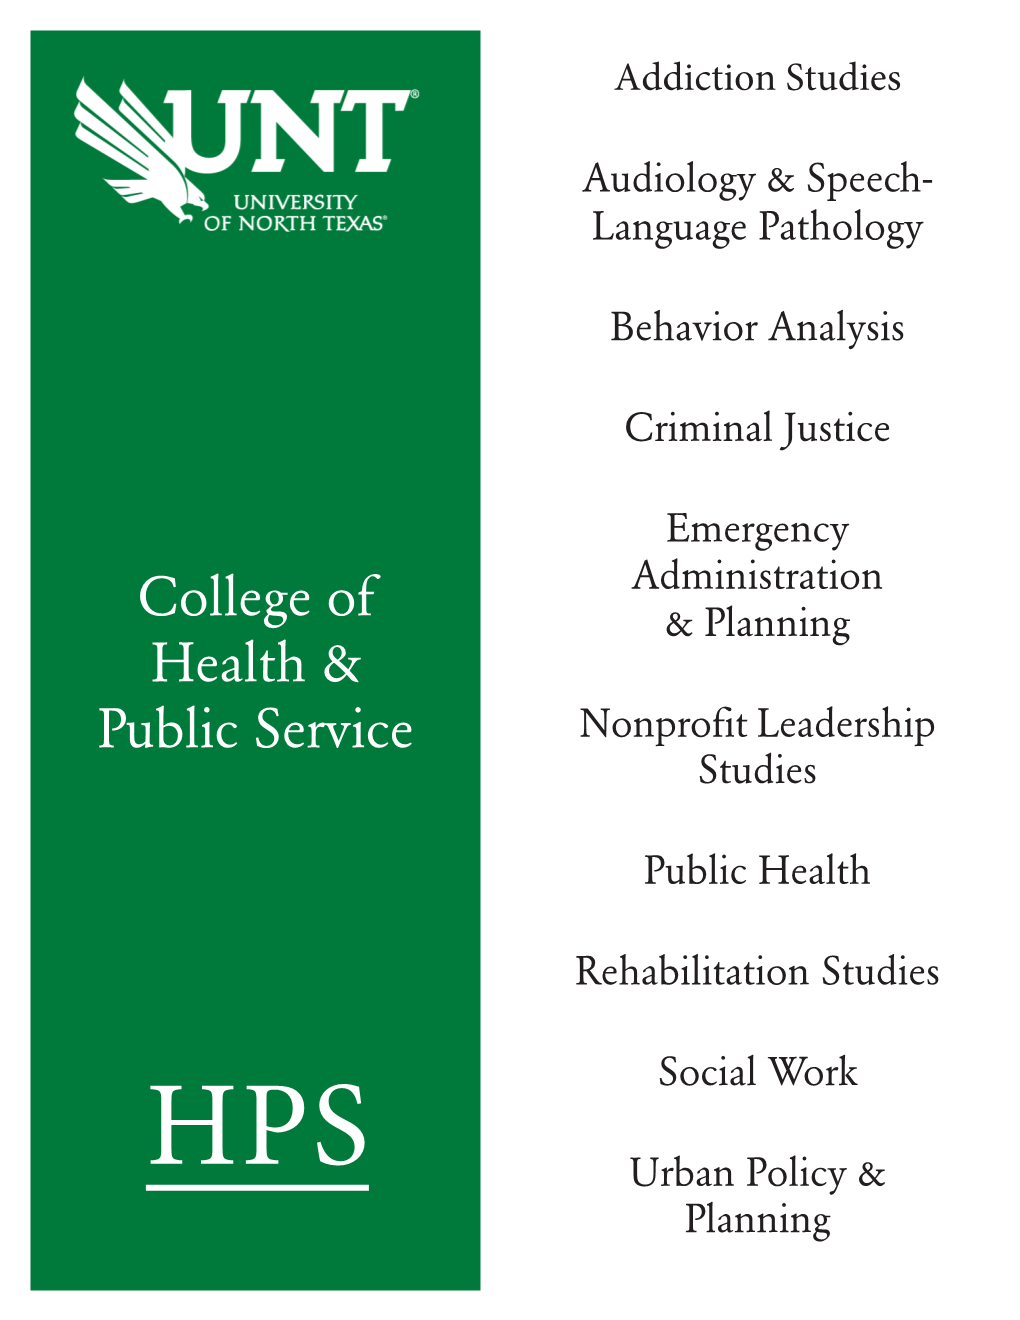 HPS Orientation Booklet